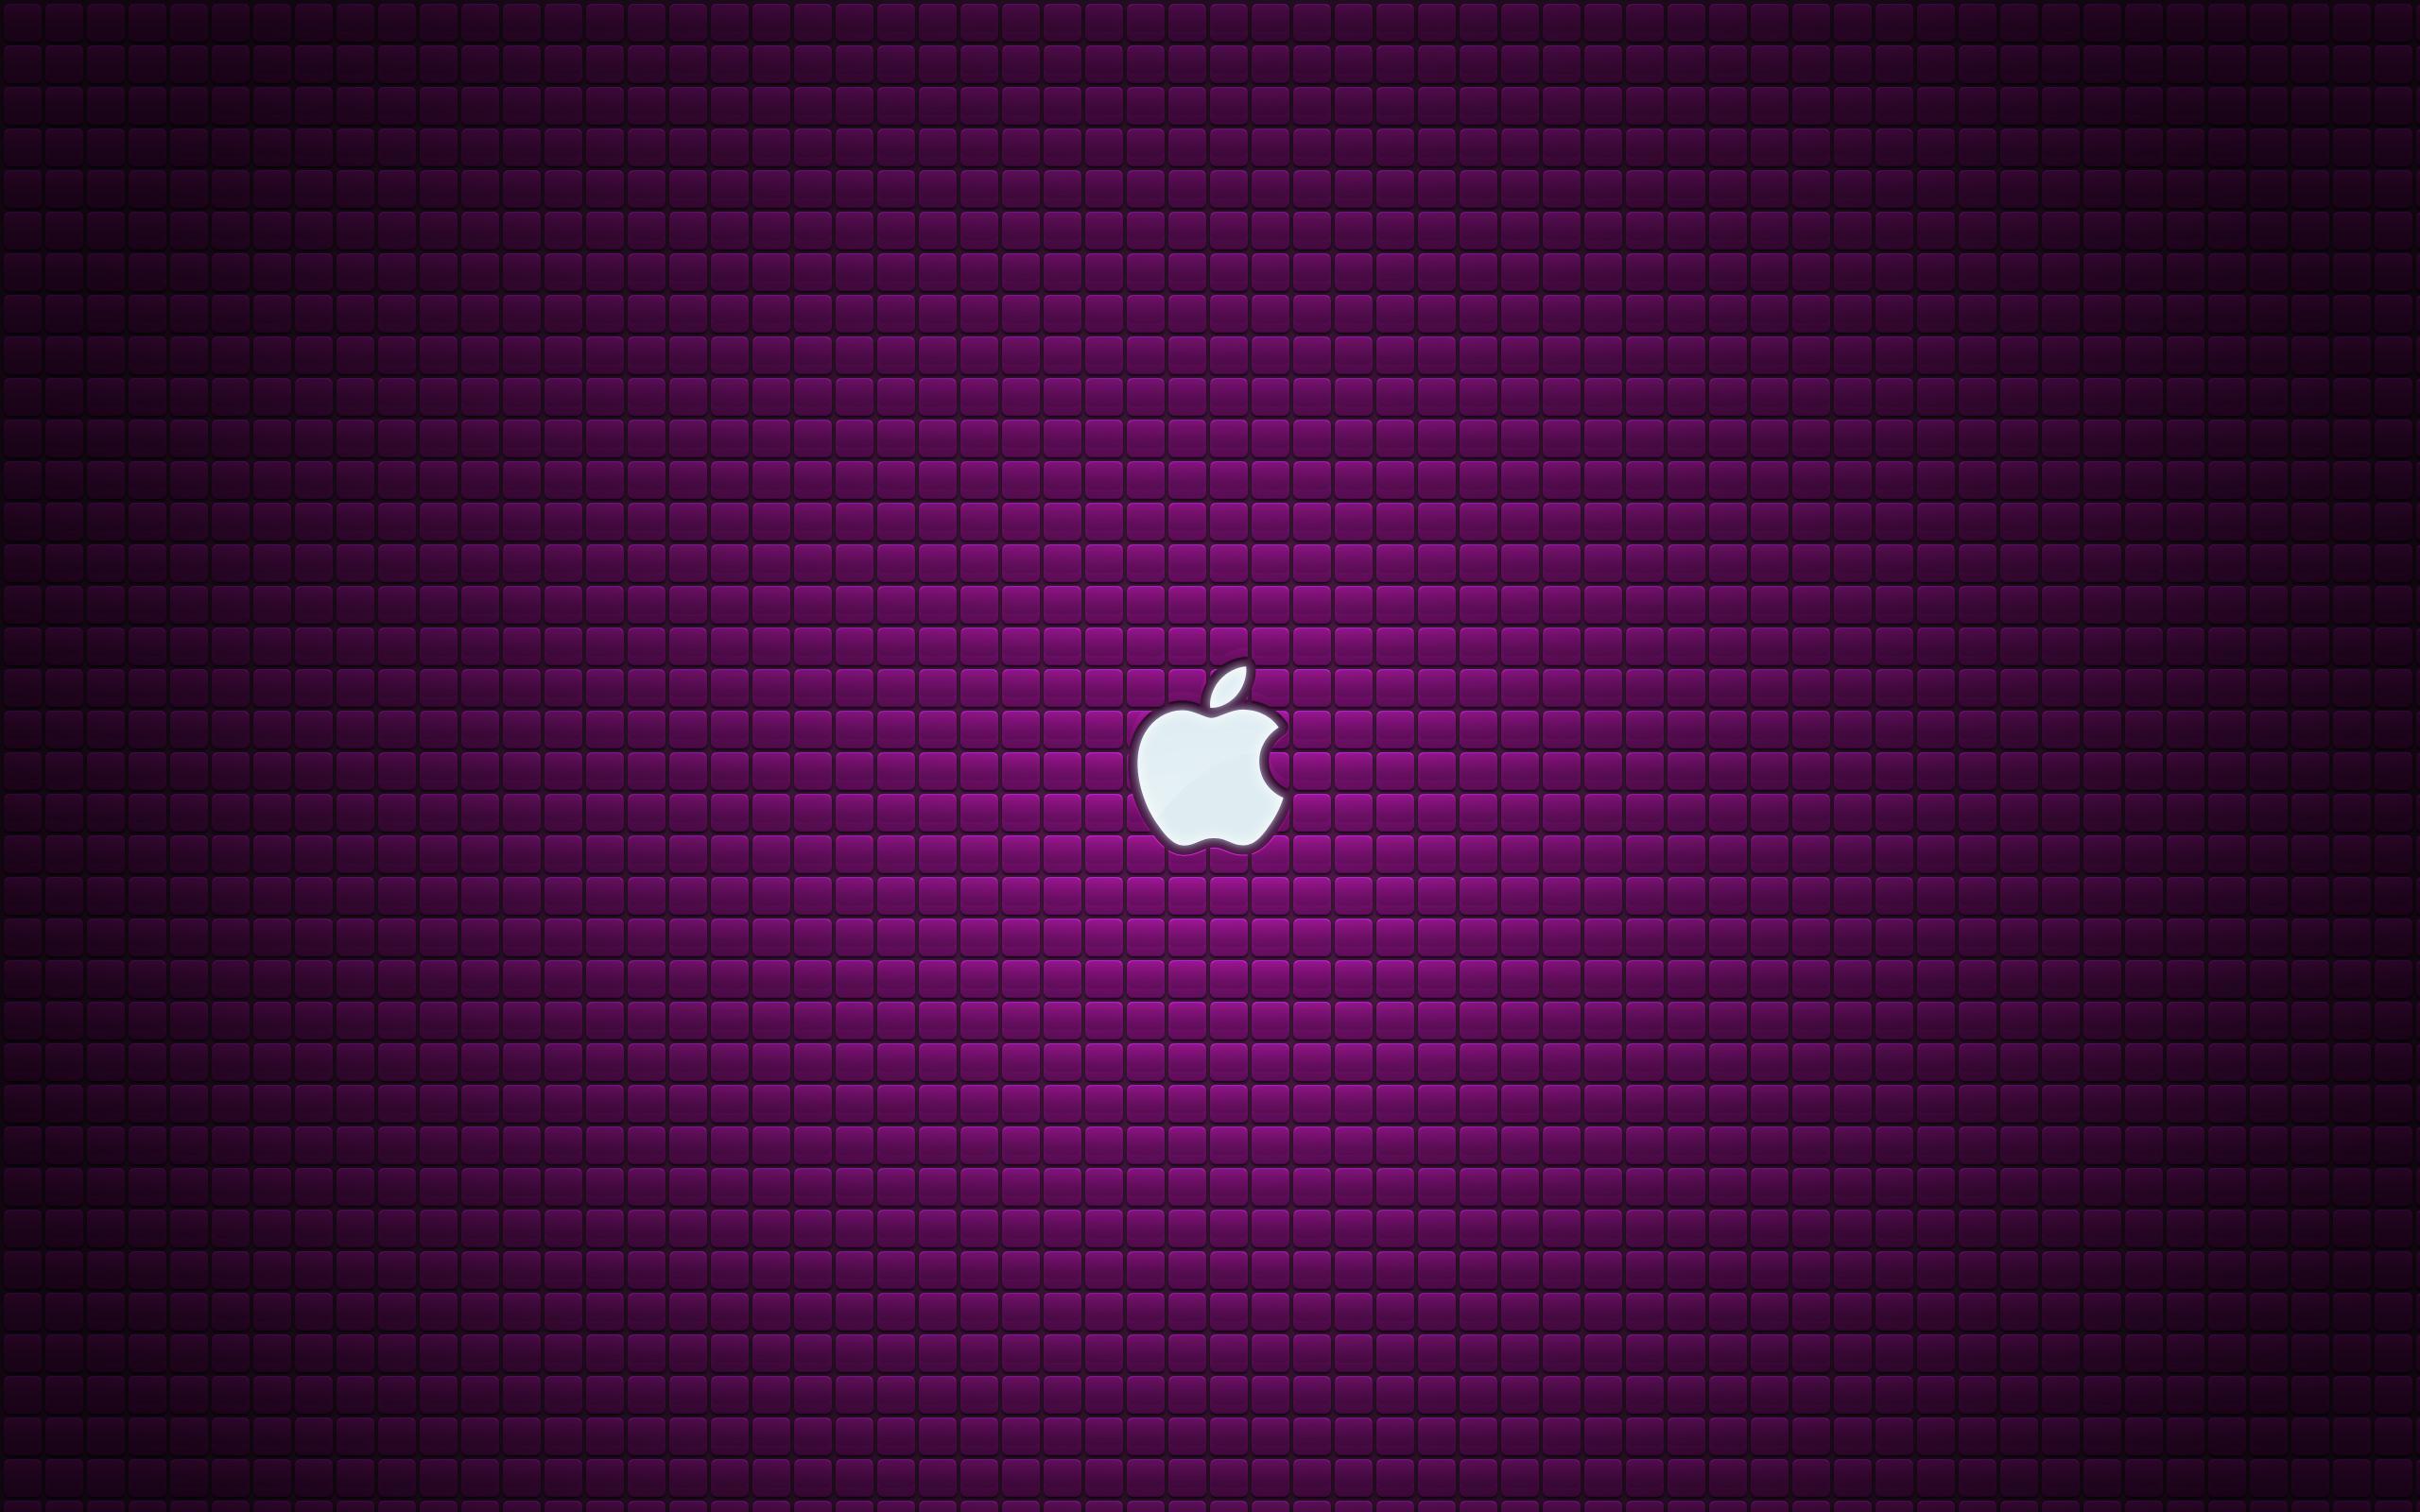 Apple blocks wallpaper. Apple blocks